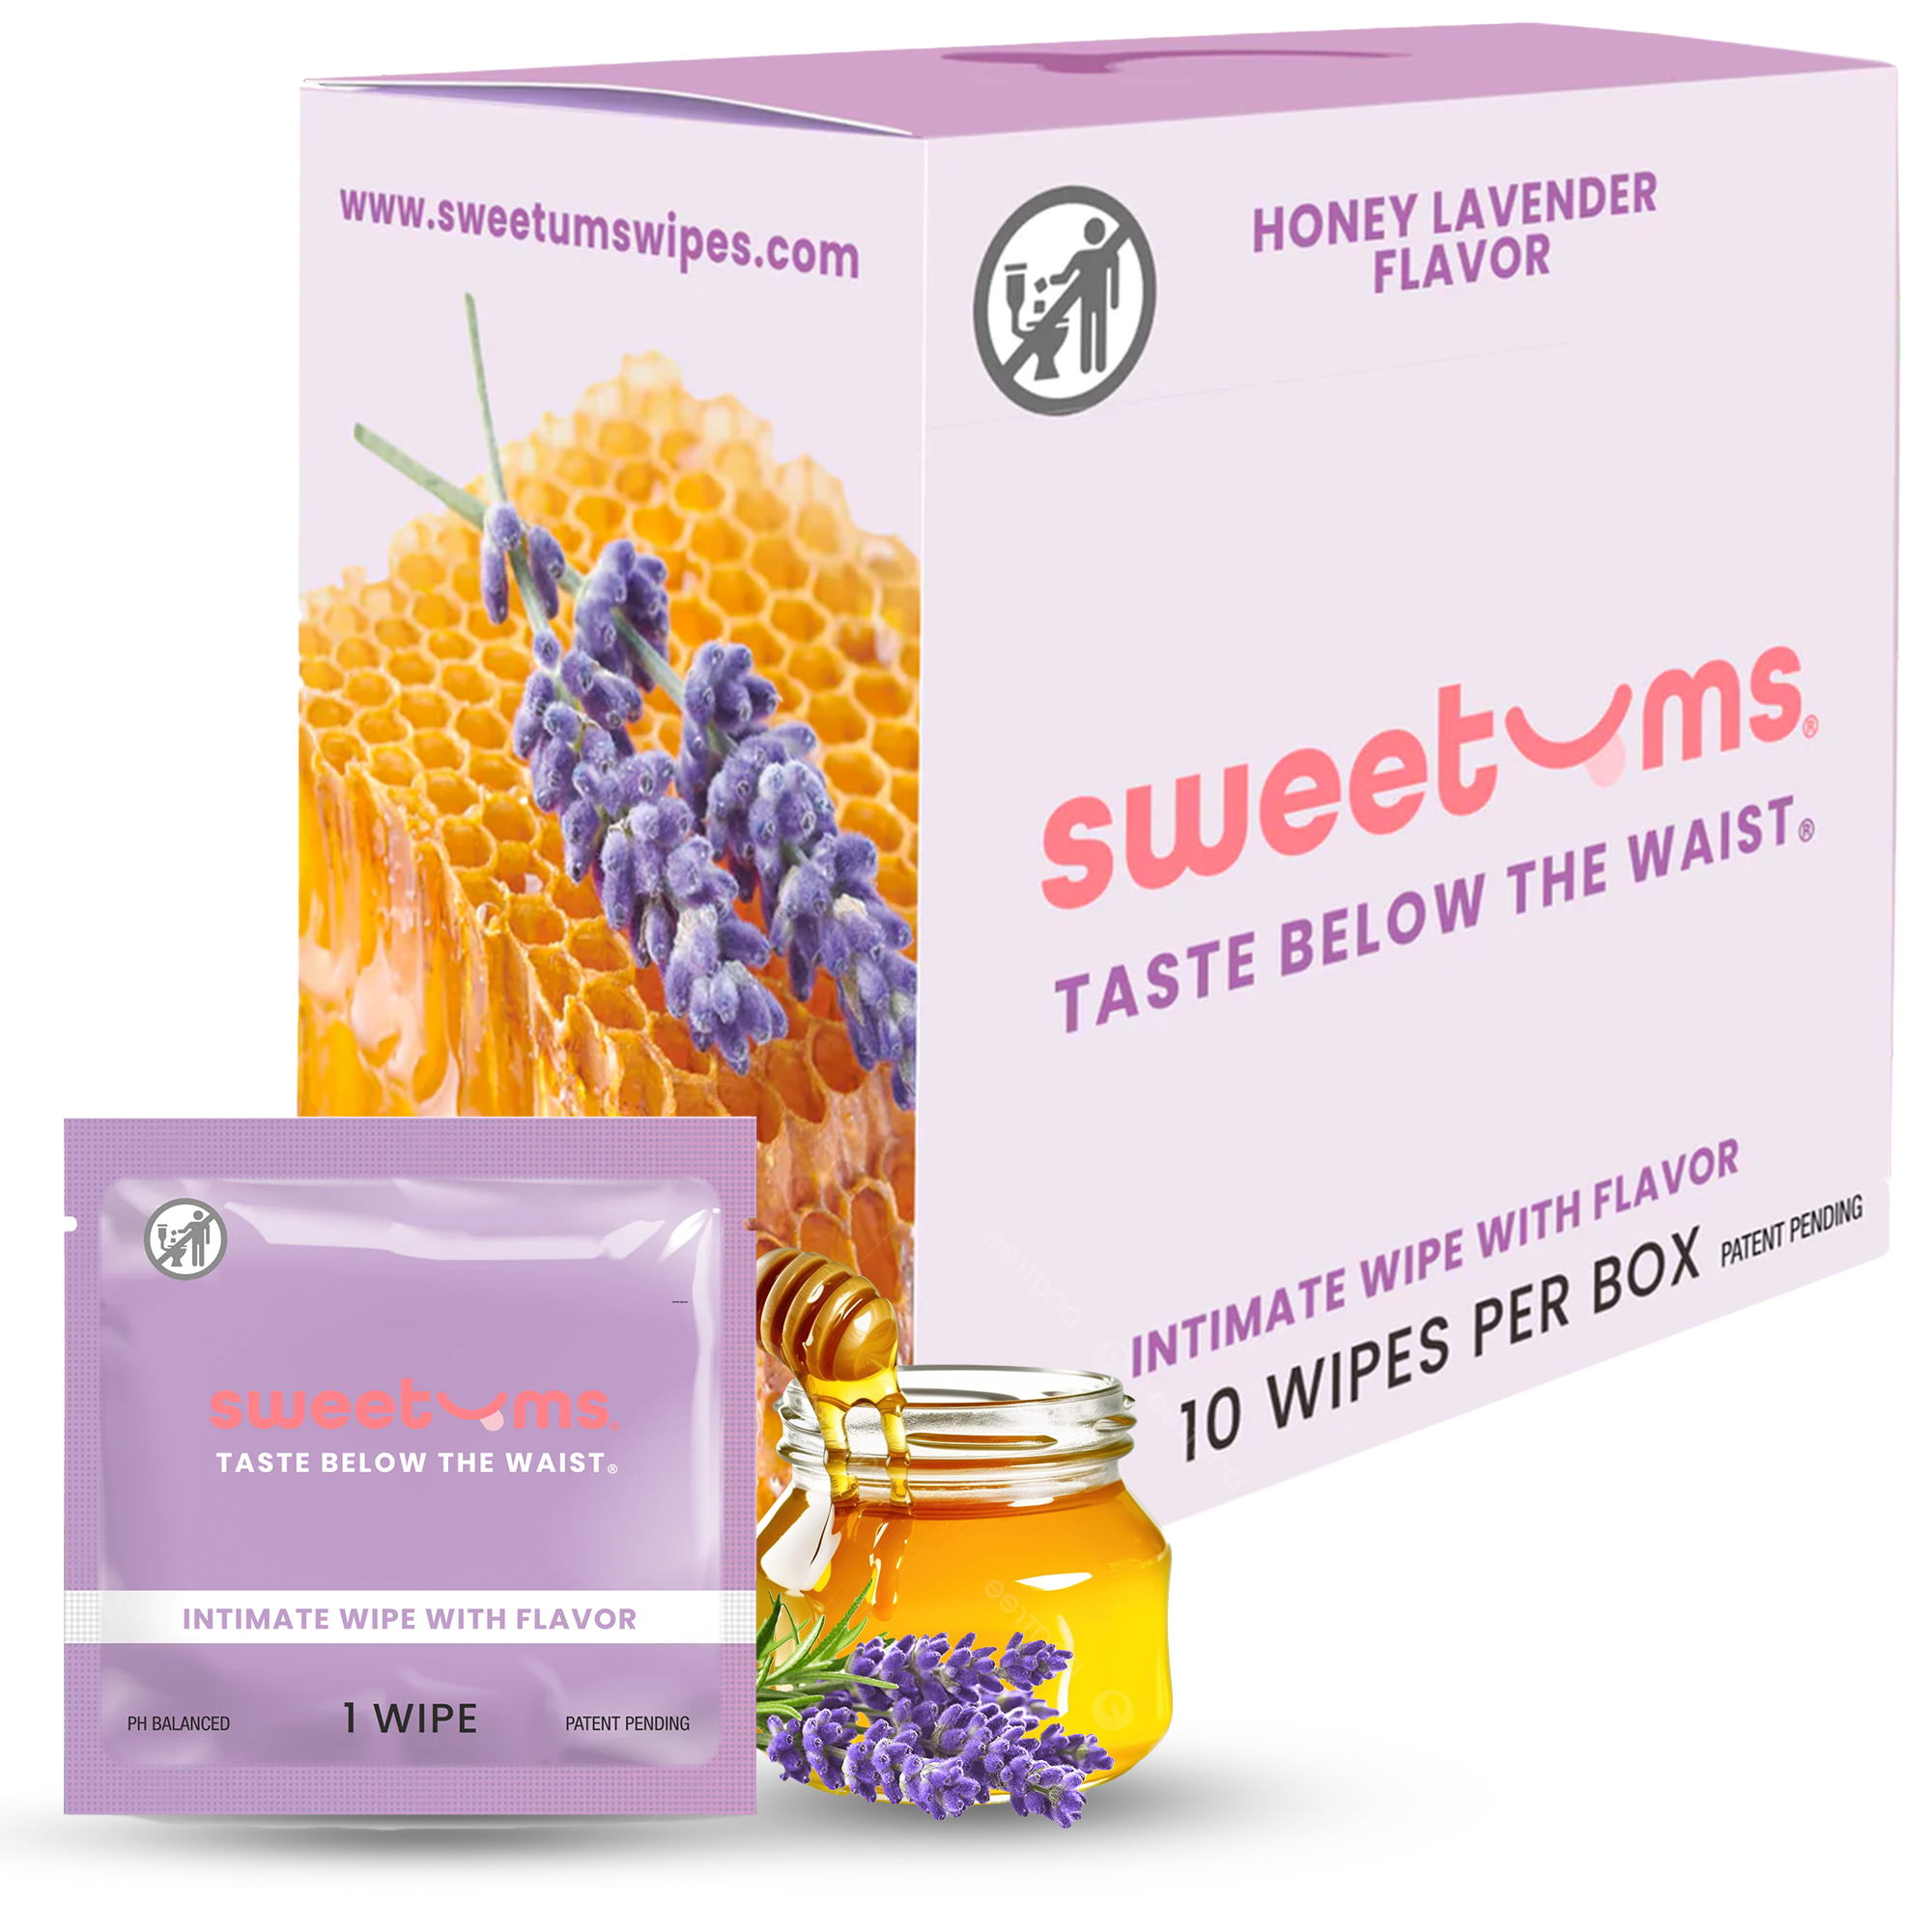 Honey Lavender Flavored Wipes